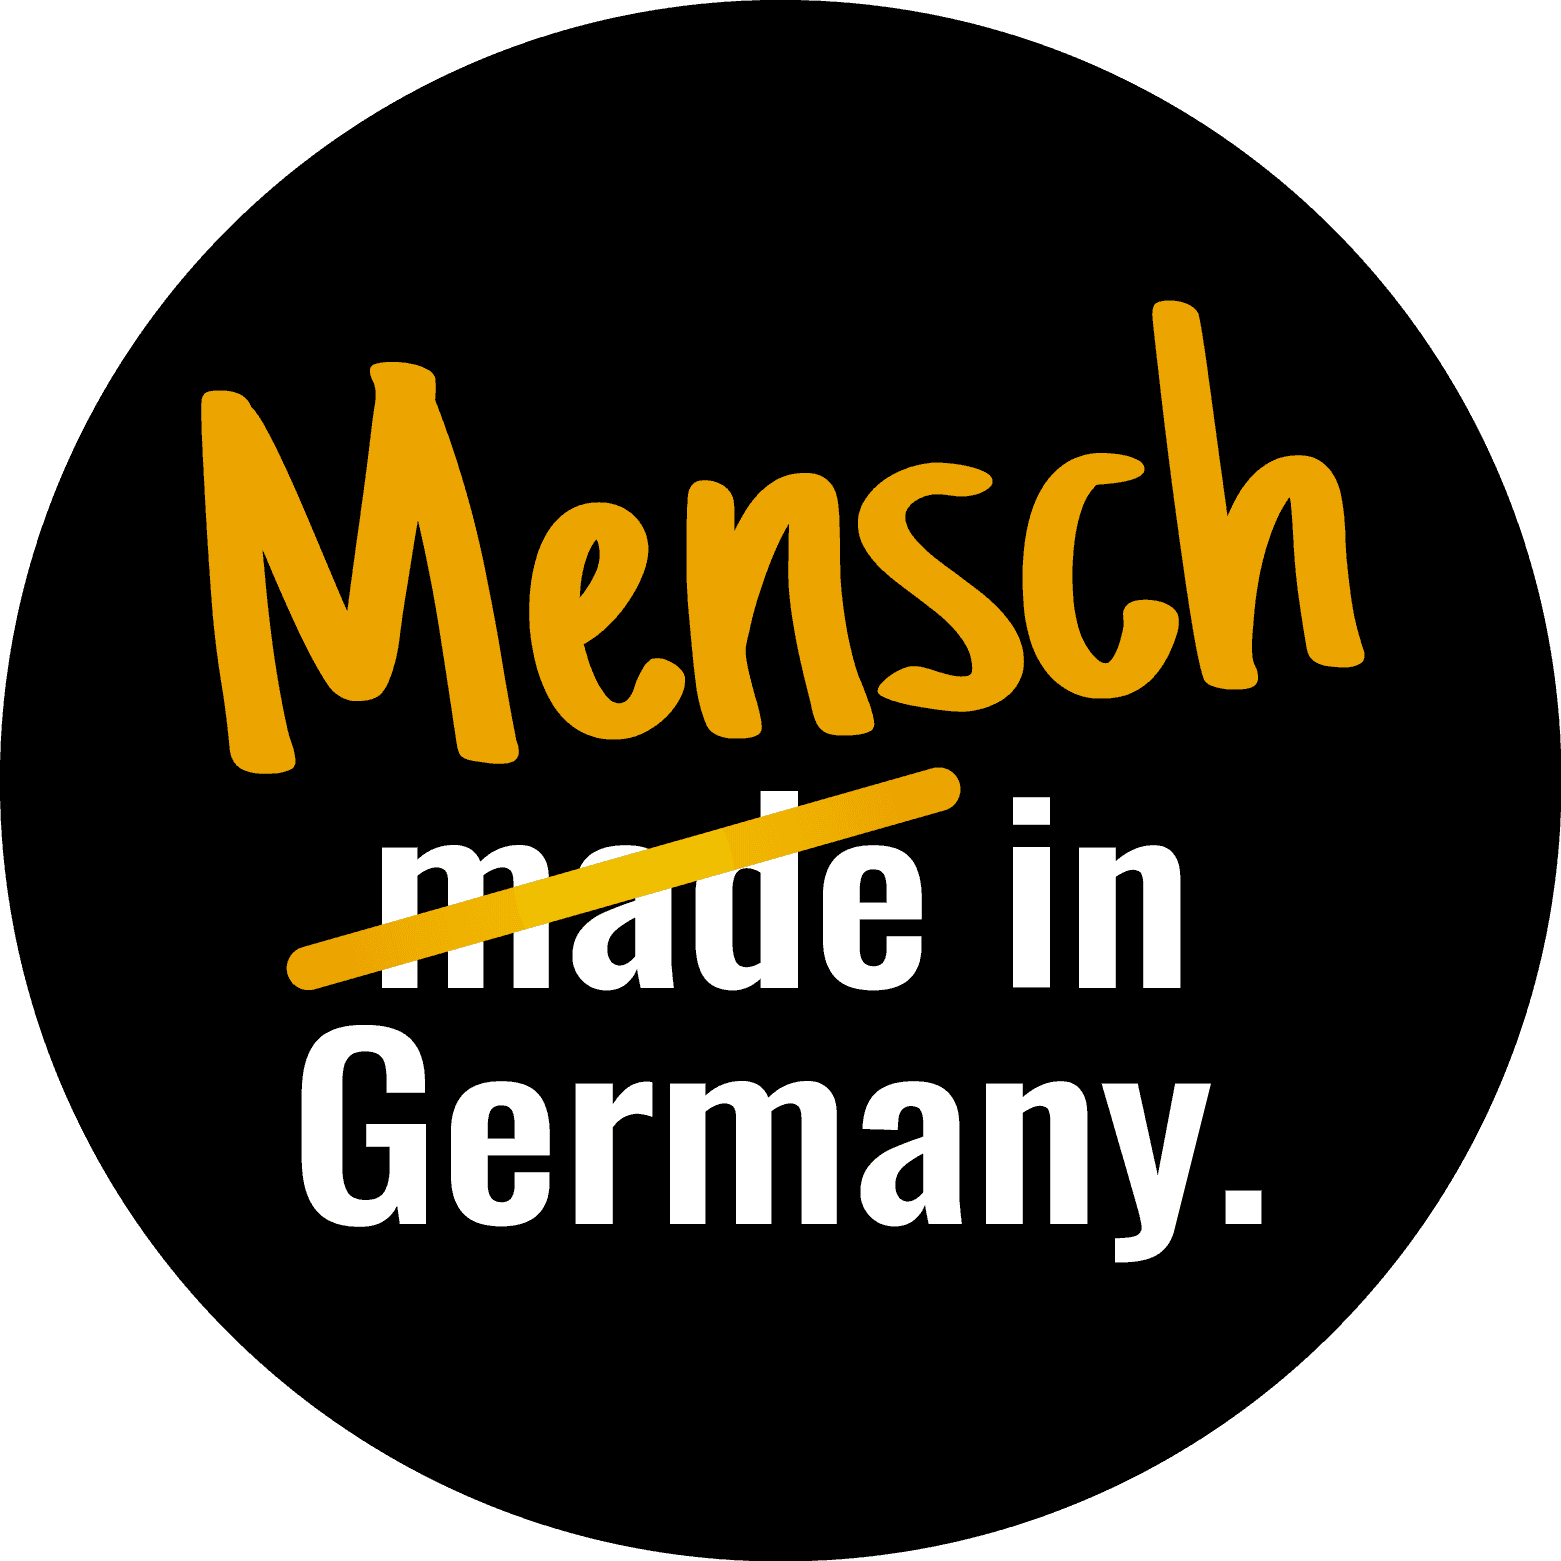 Mensch in Germany Logo